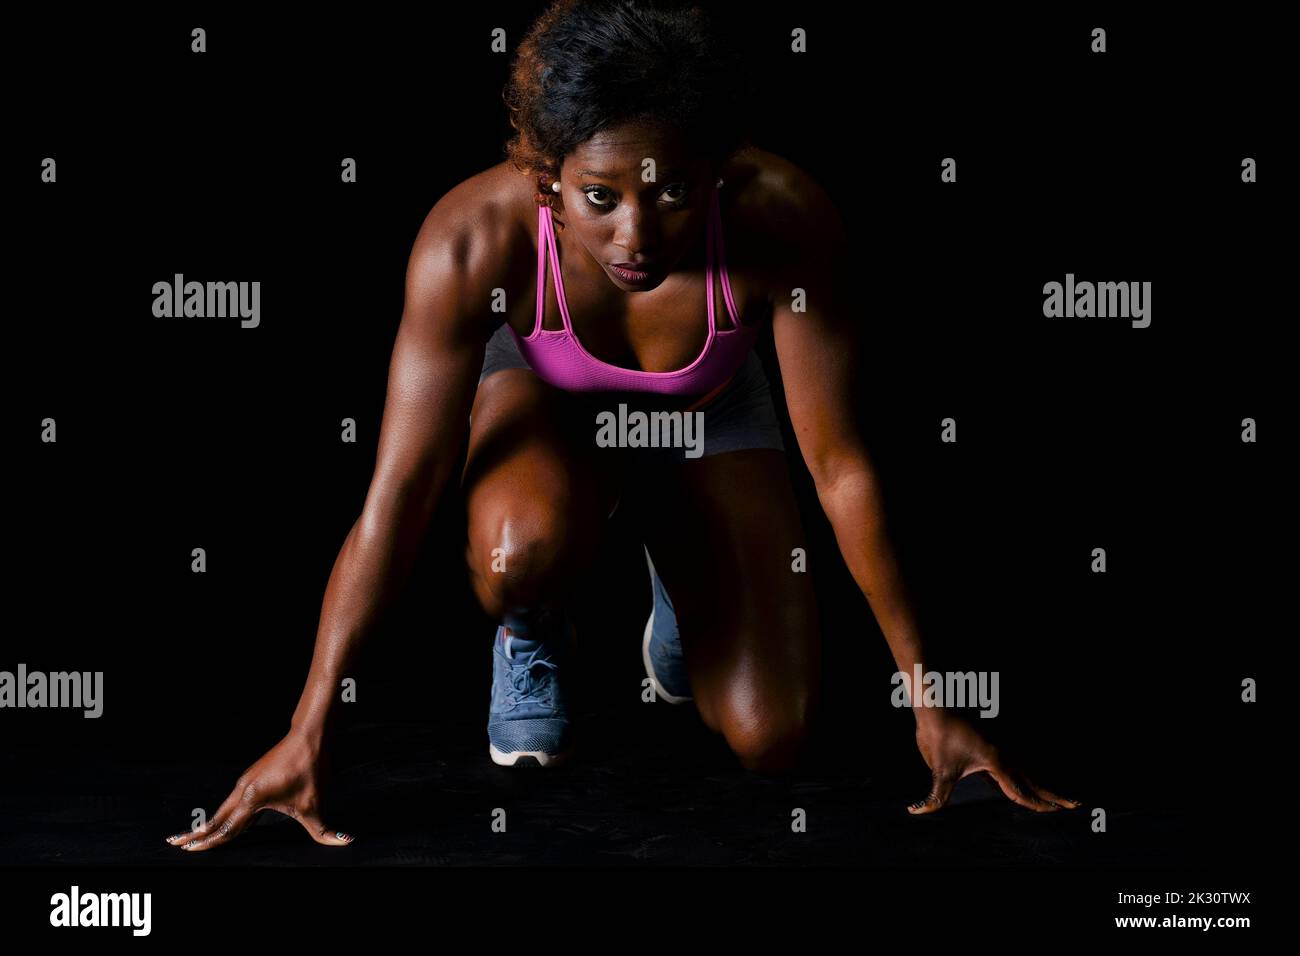 Athlete in starting position for running against black background Stock Photo